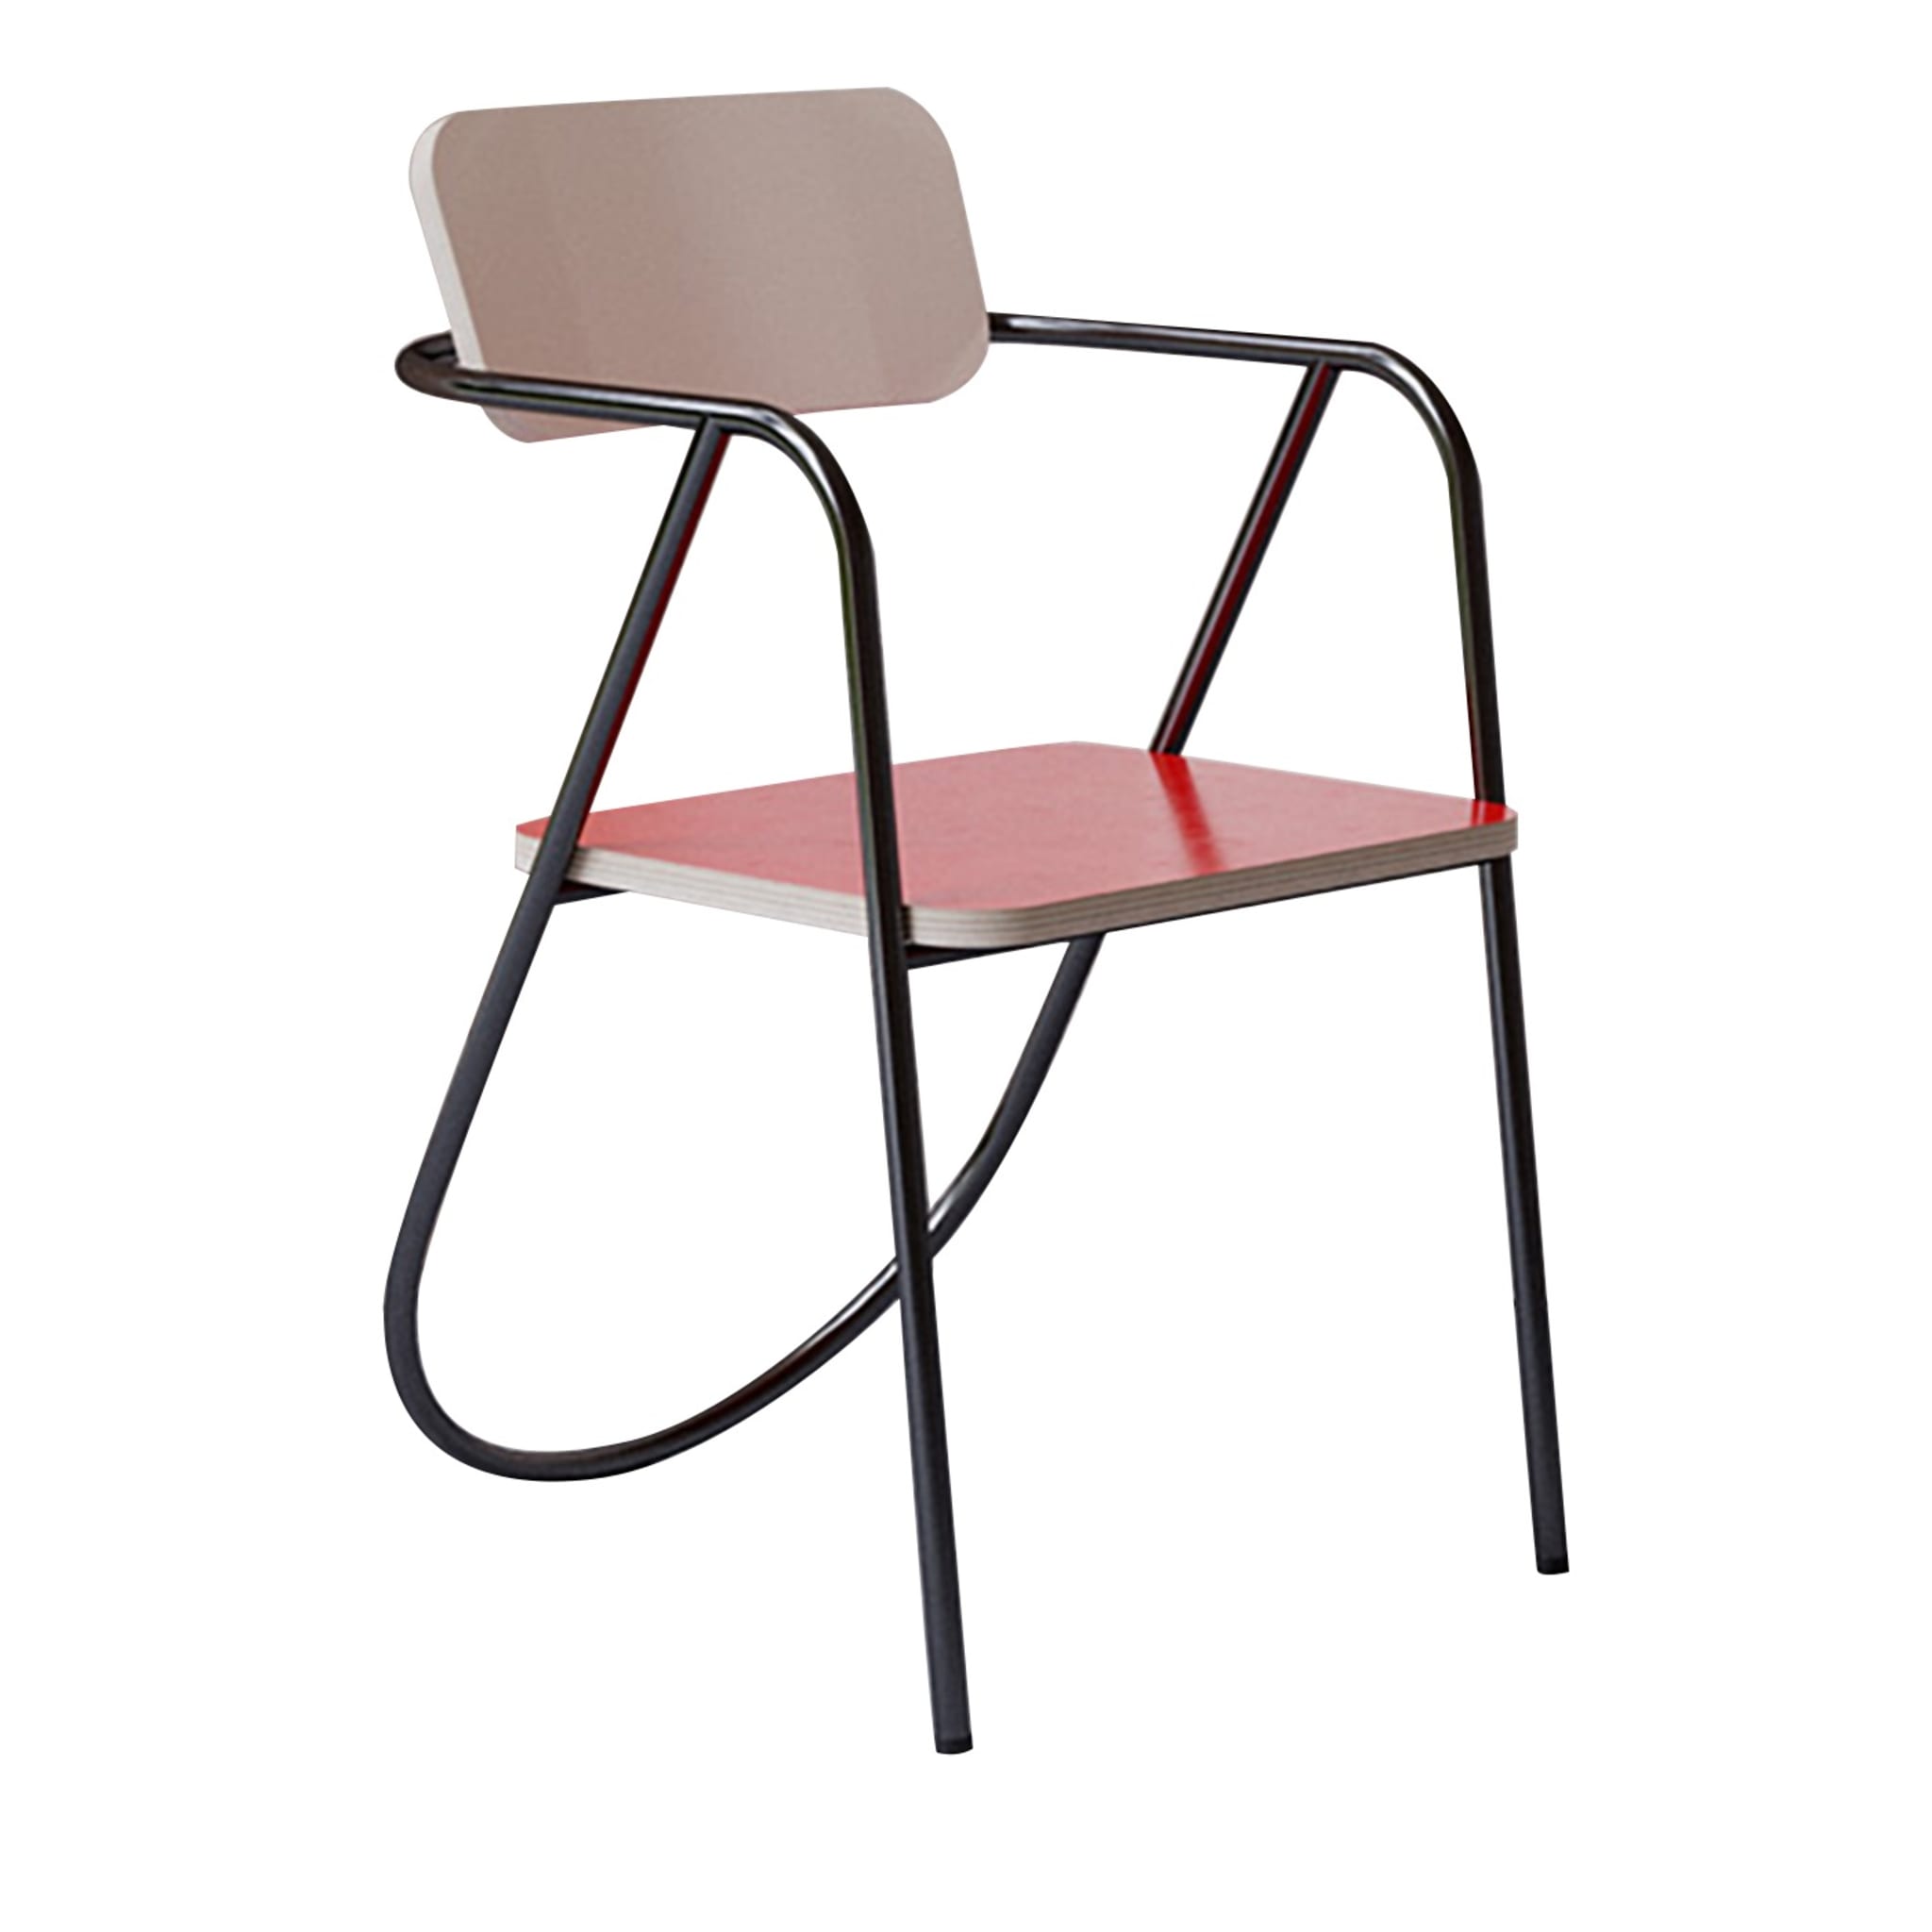 La Misciù Red/Light Wood/Red Chair - Main view